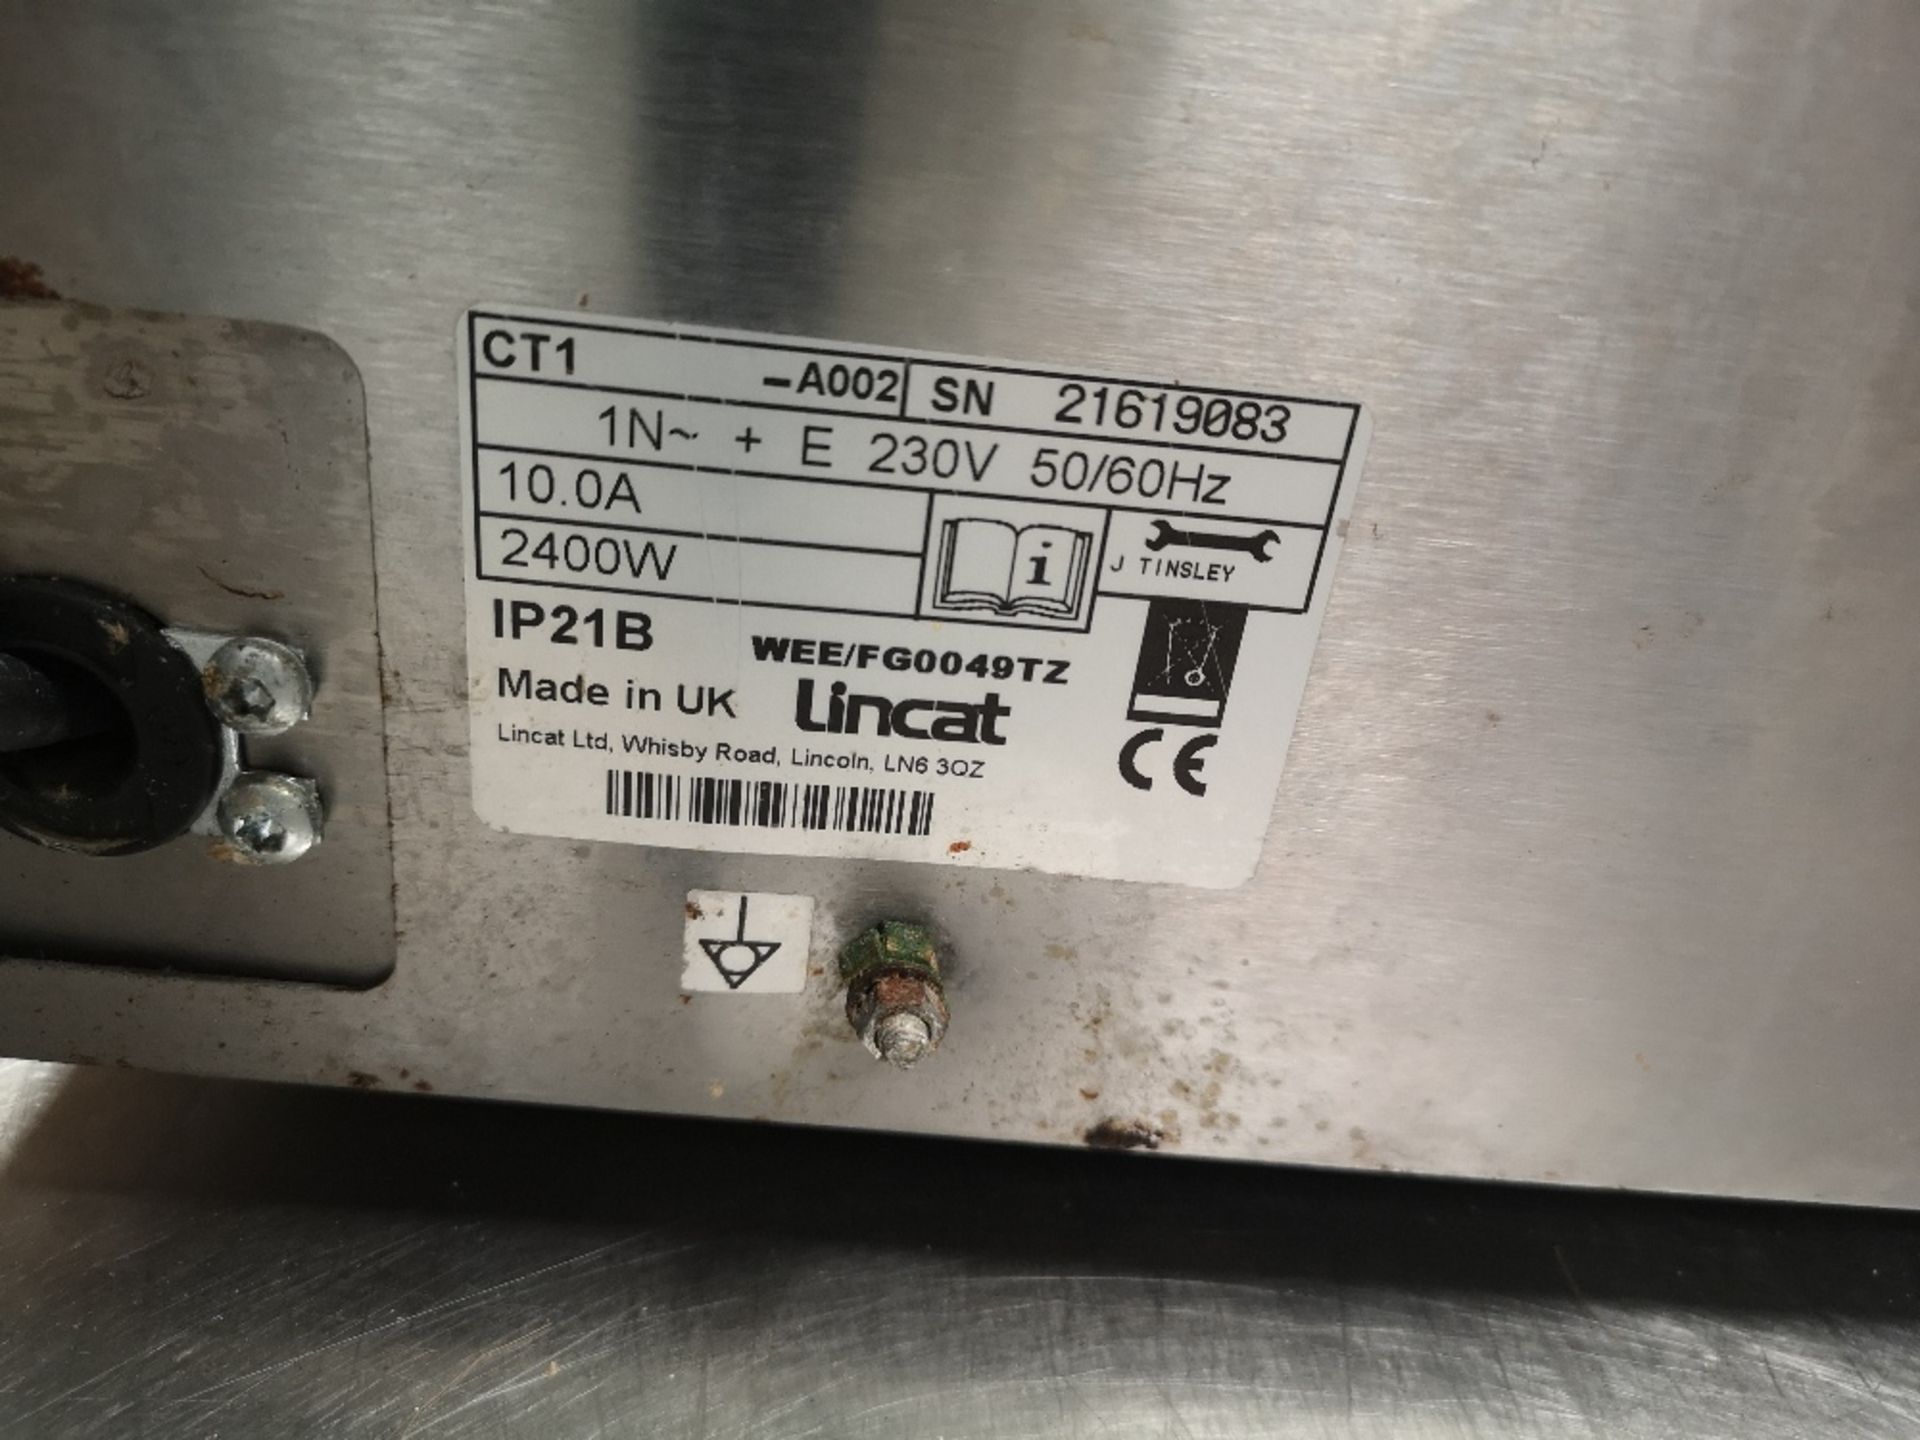 Lincat CT1 Stainless Steel Conveyor Toaster - Image 3 of 3